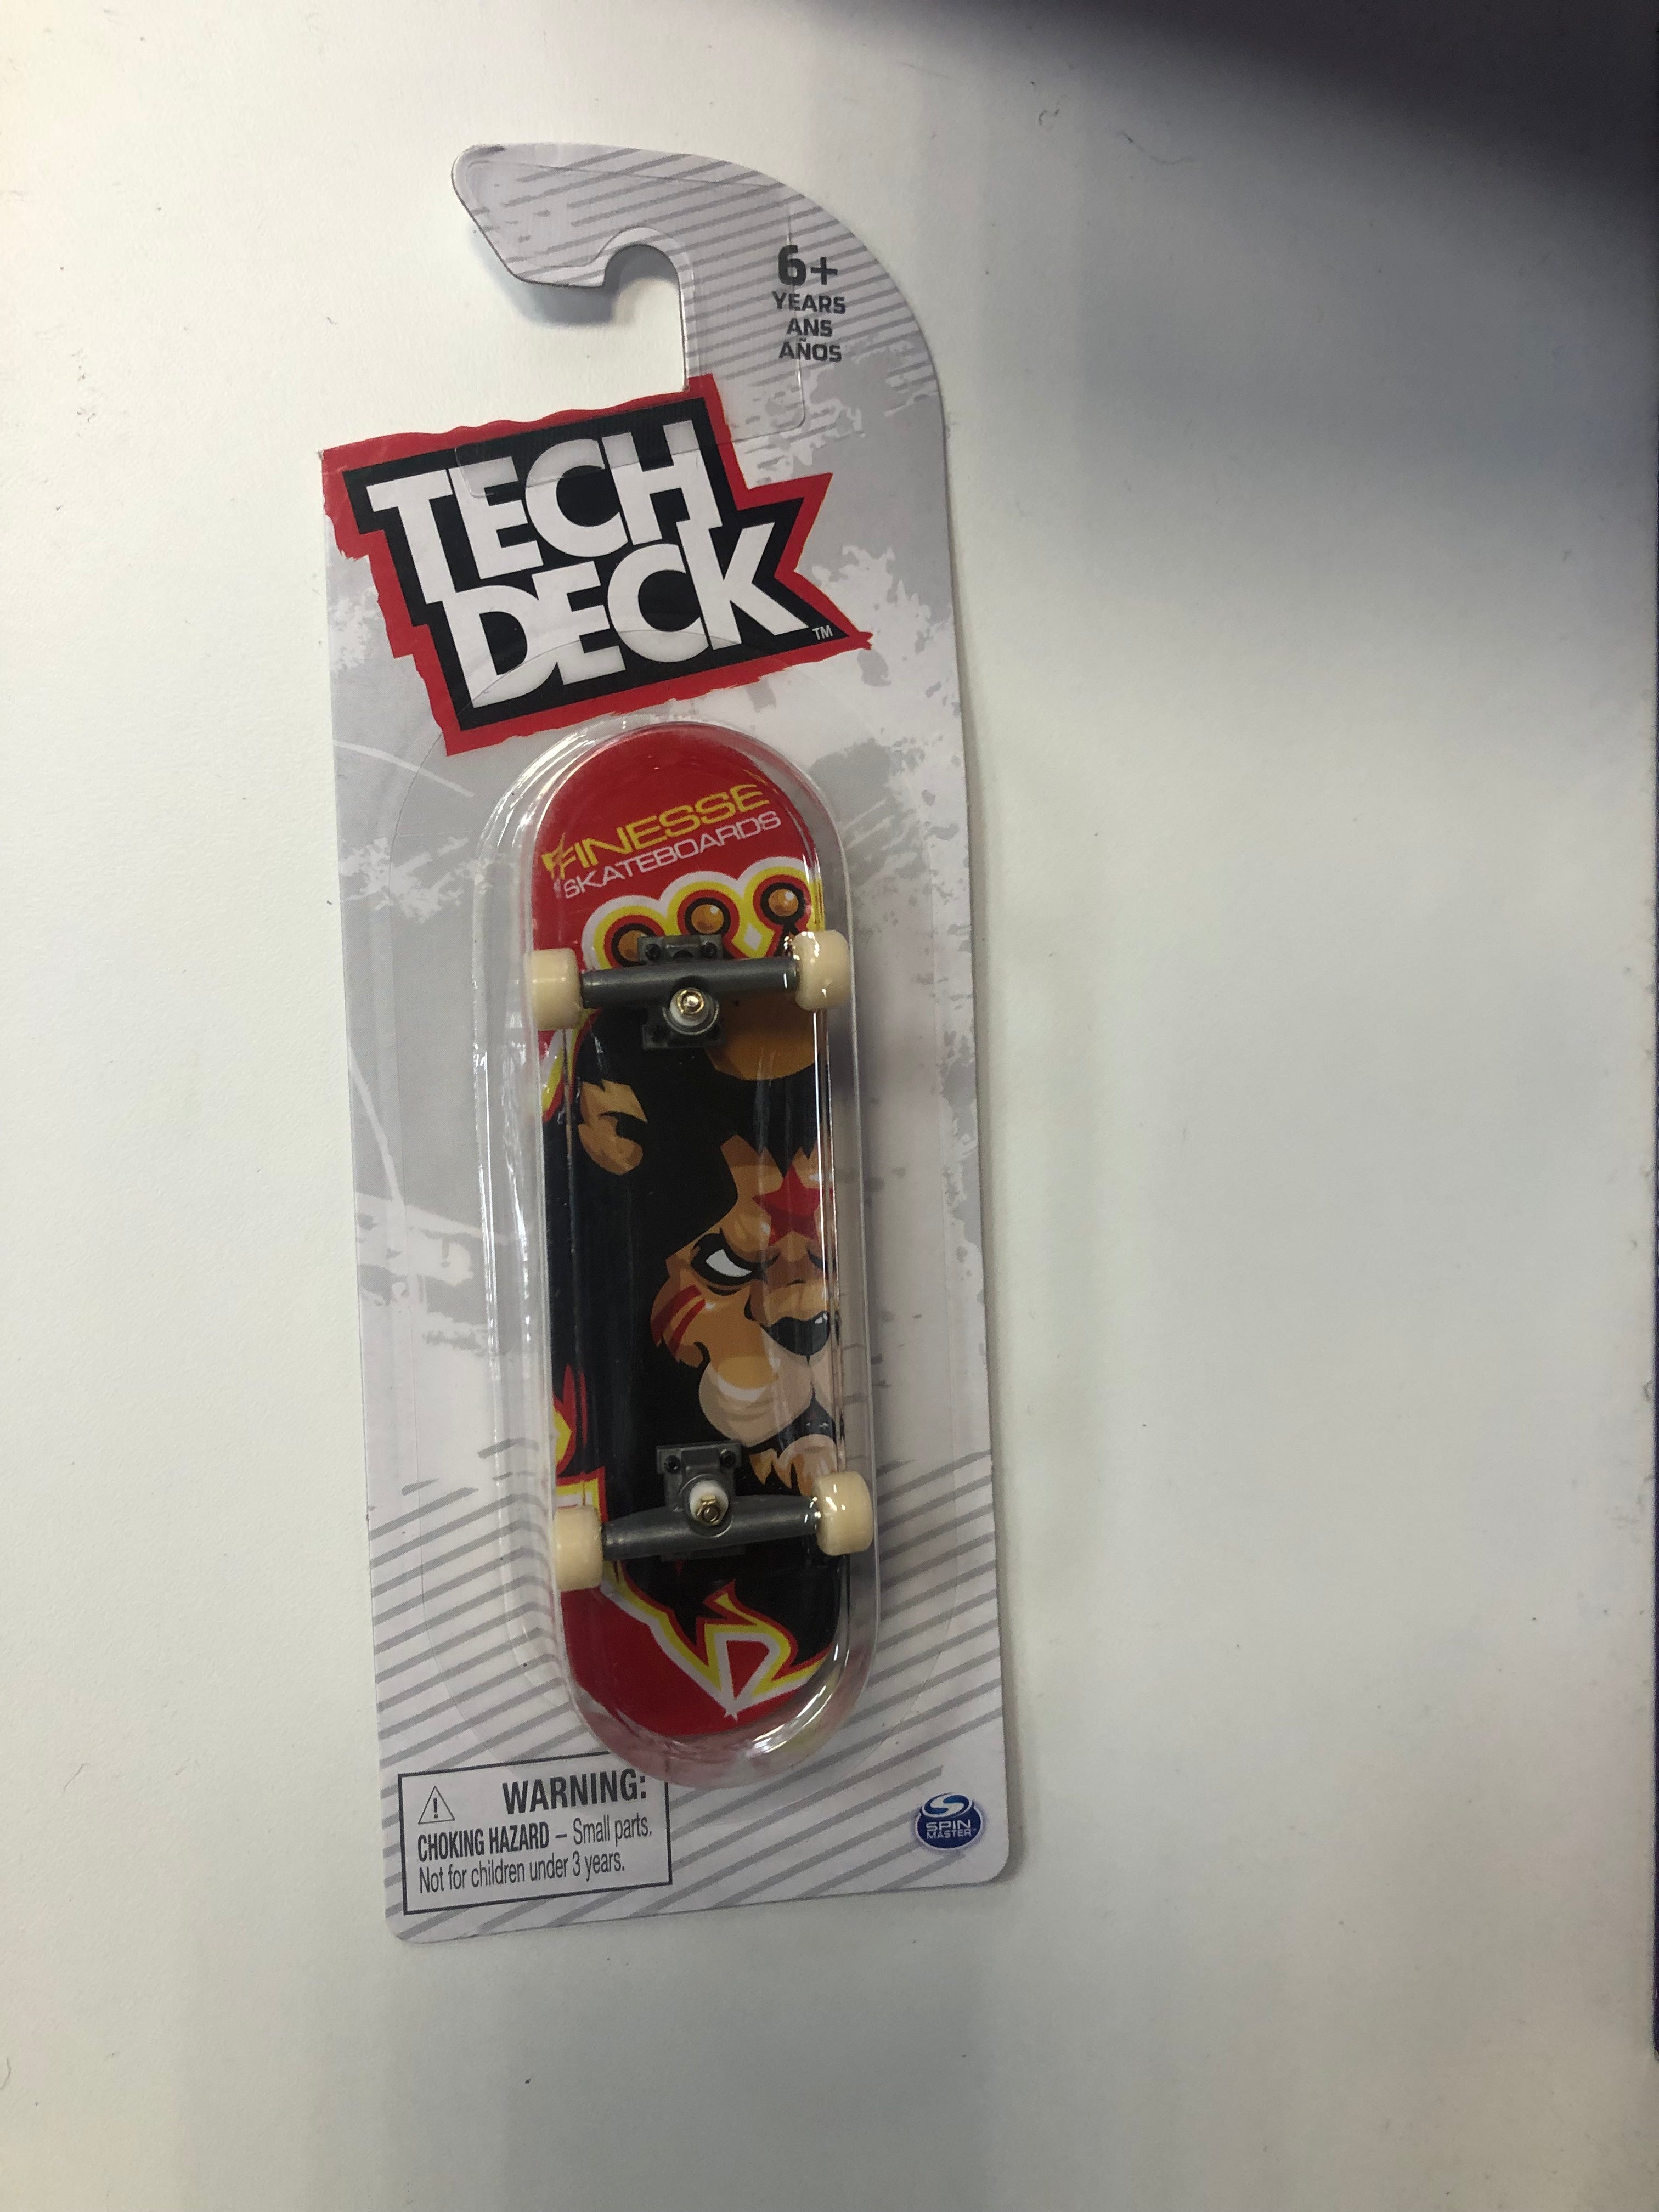 Tech Deck singles